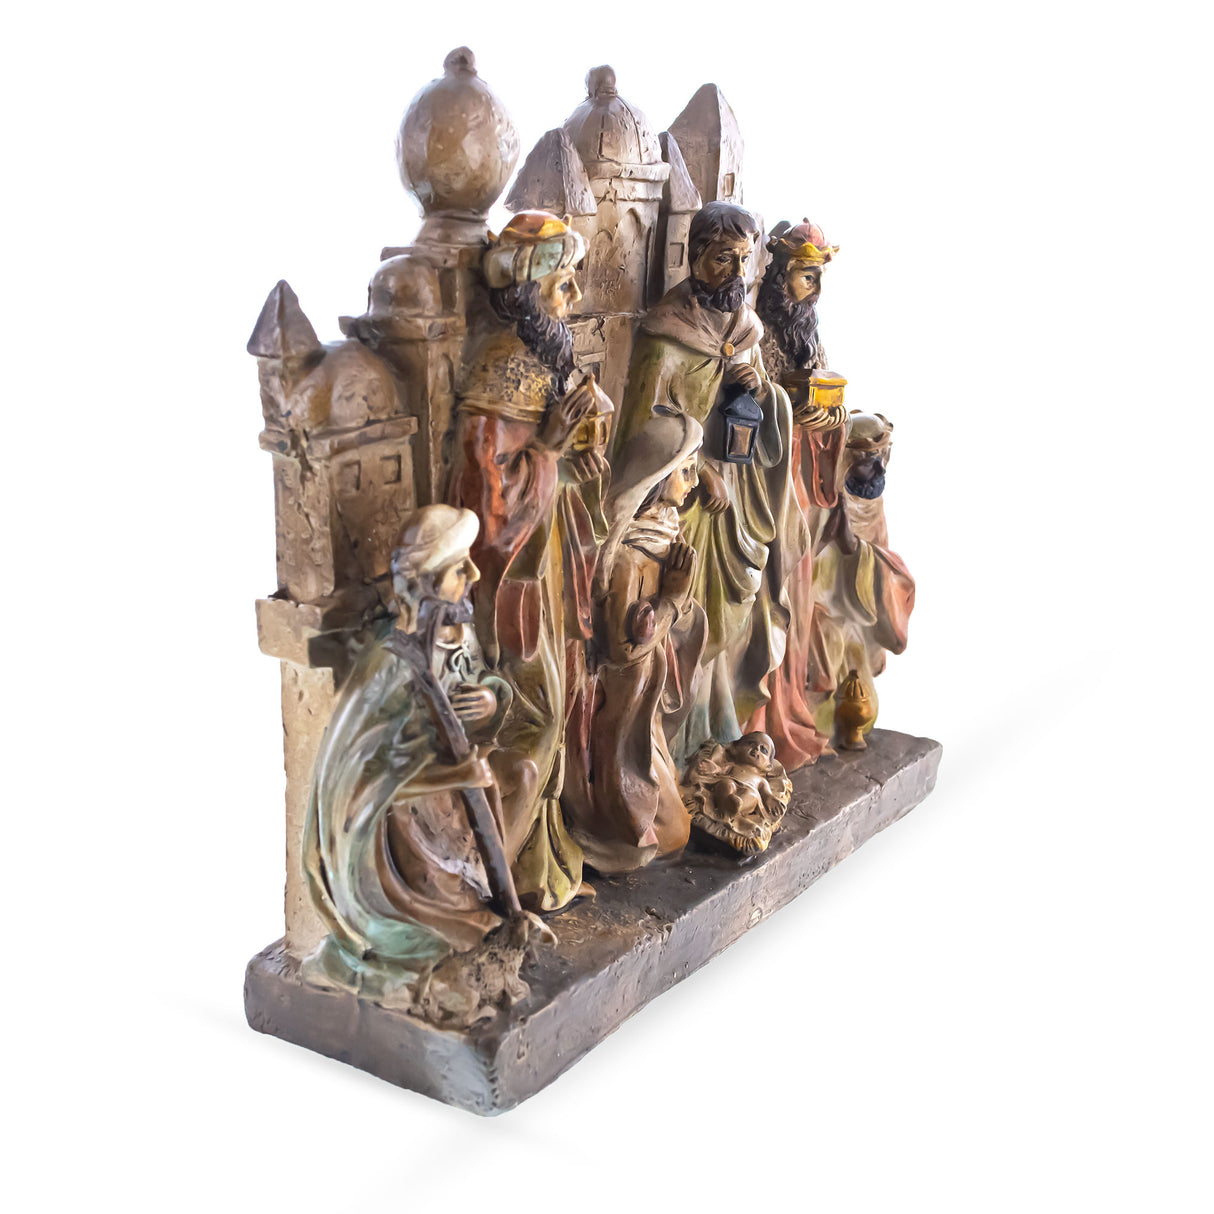 BestPysanky online gift shop sells religious figurines, catholic figurines, Jesus